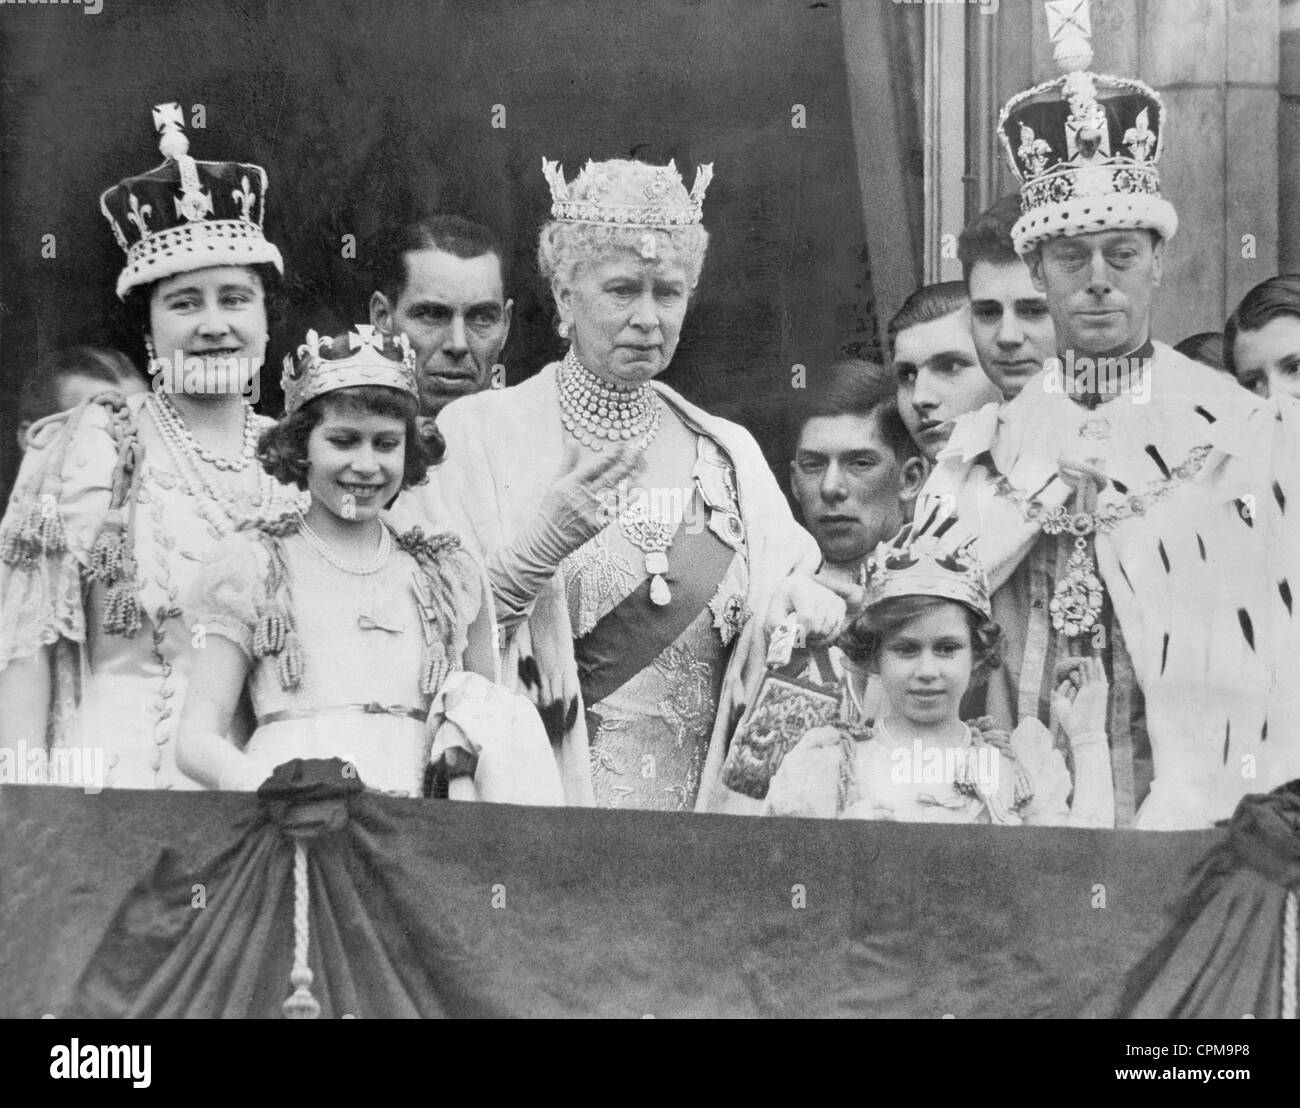 The royal family on the balcony of the Buckingham Palace, 1937 Stock Photo